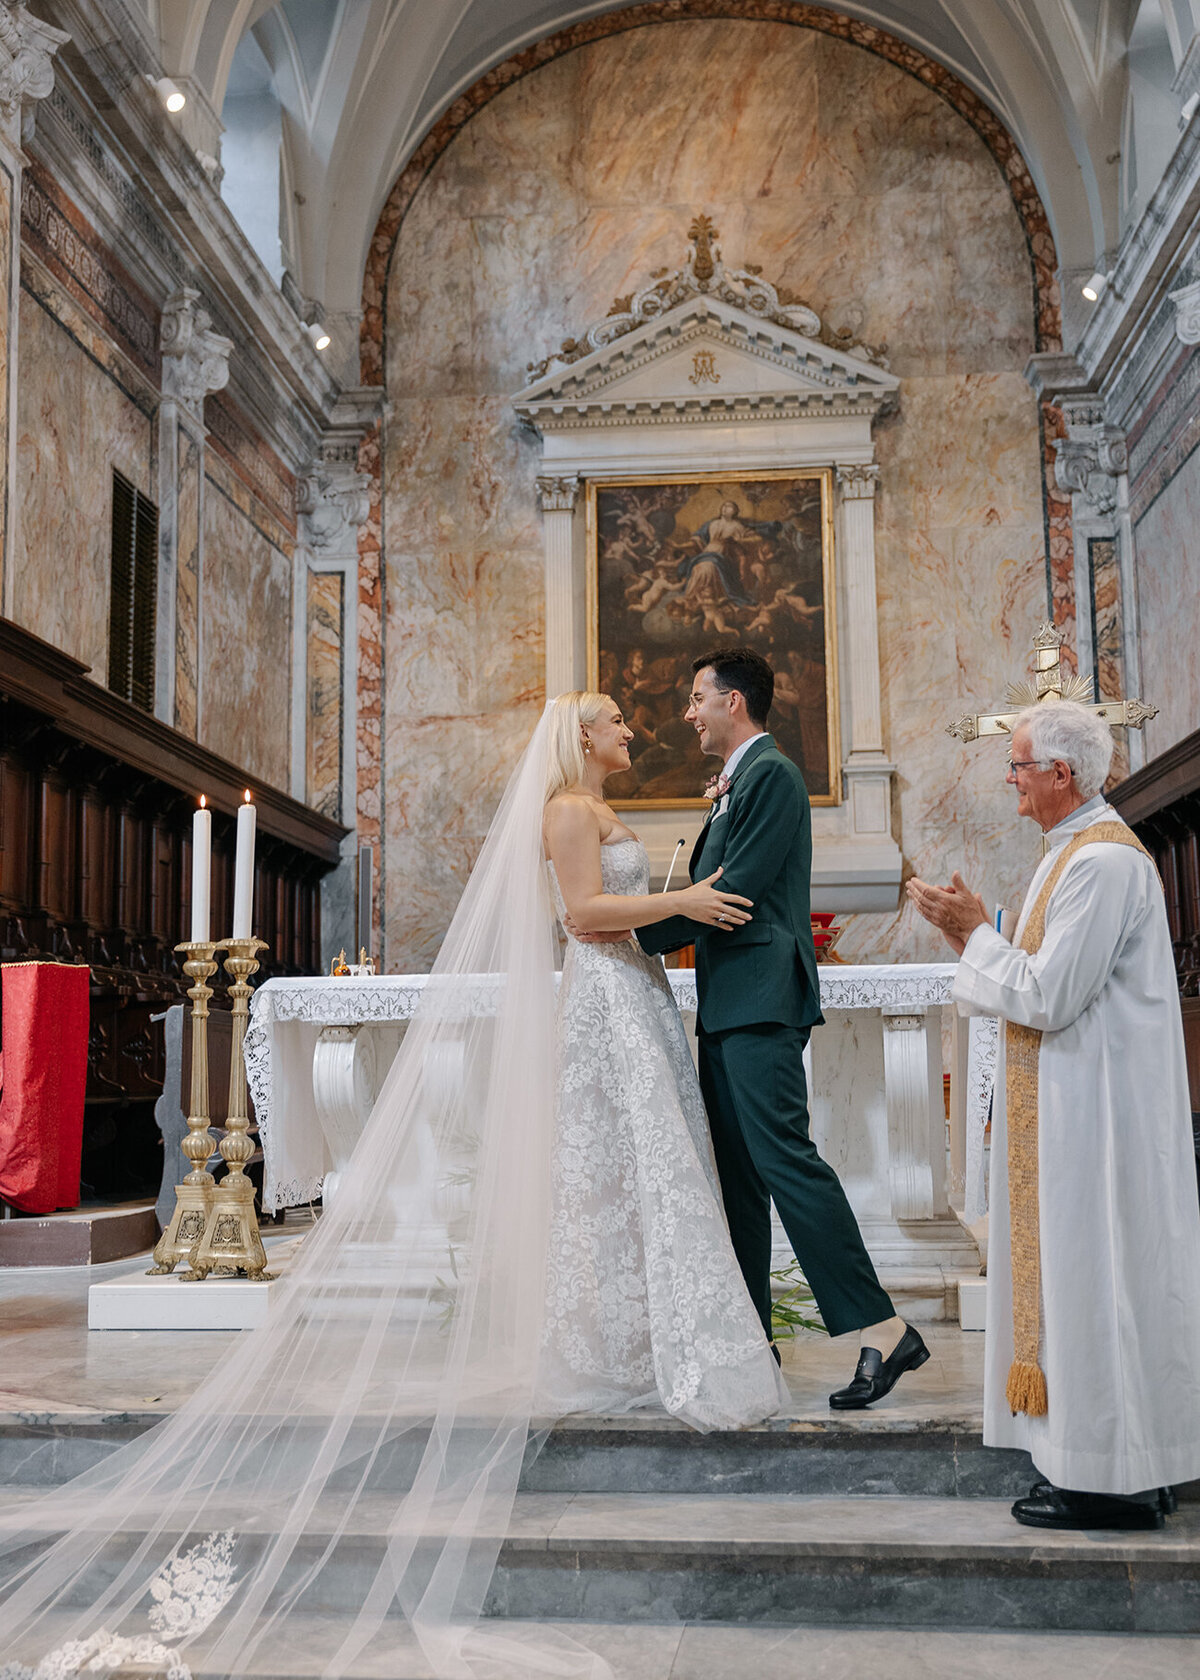 Nastia Vesna Wedding Photographer in Italy